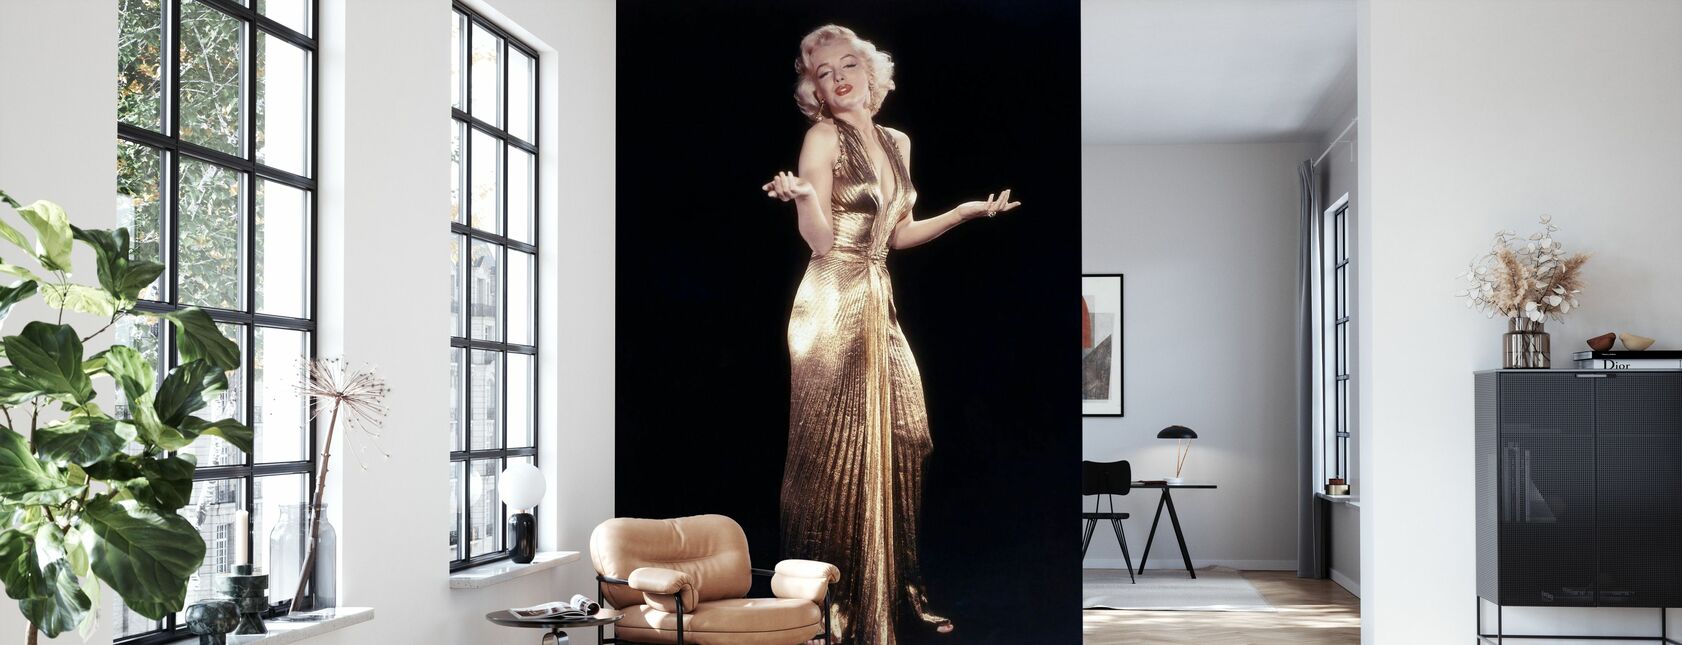 Gentlemen Prefer Blondes - Wallpaper - Living Room